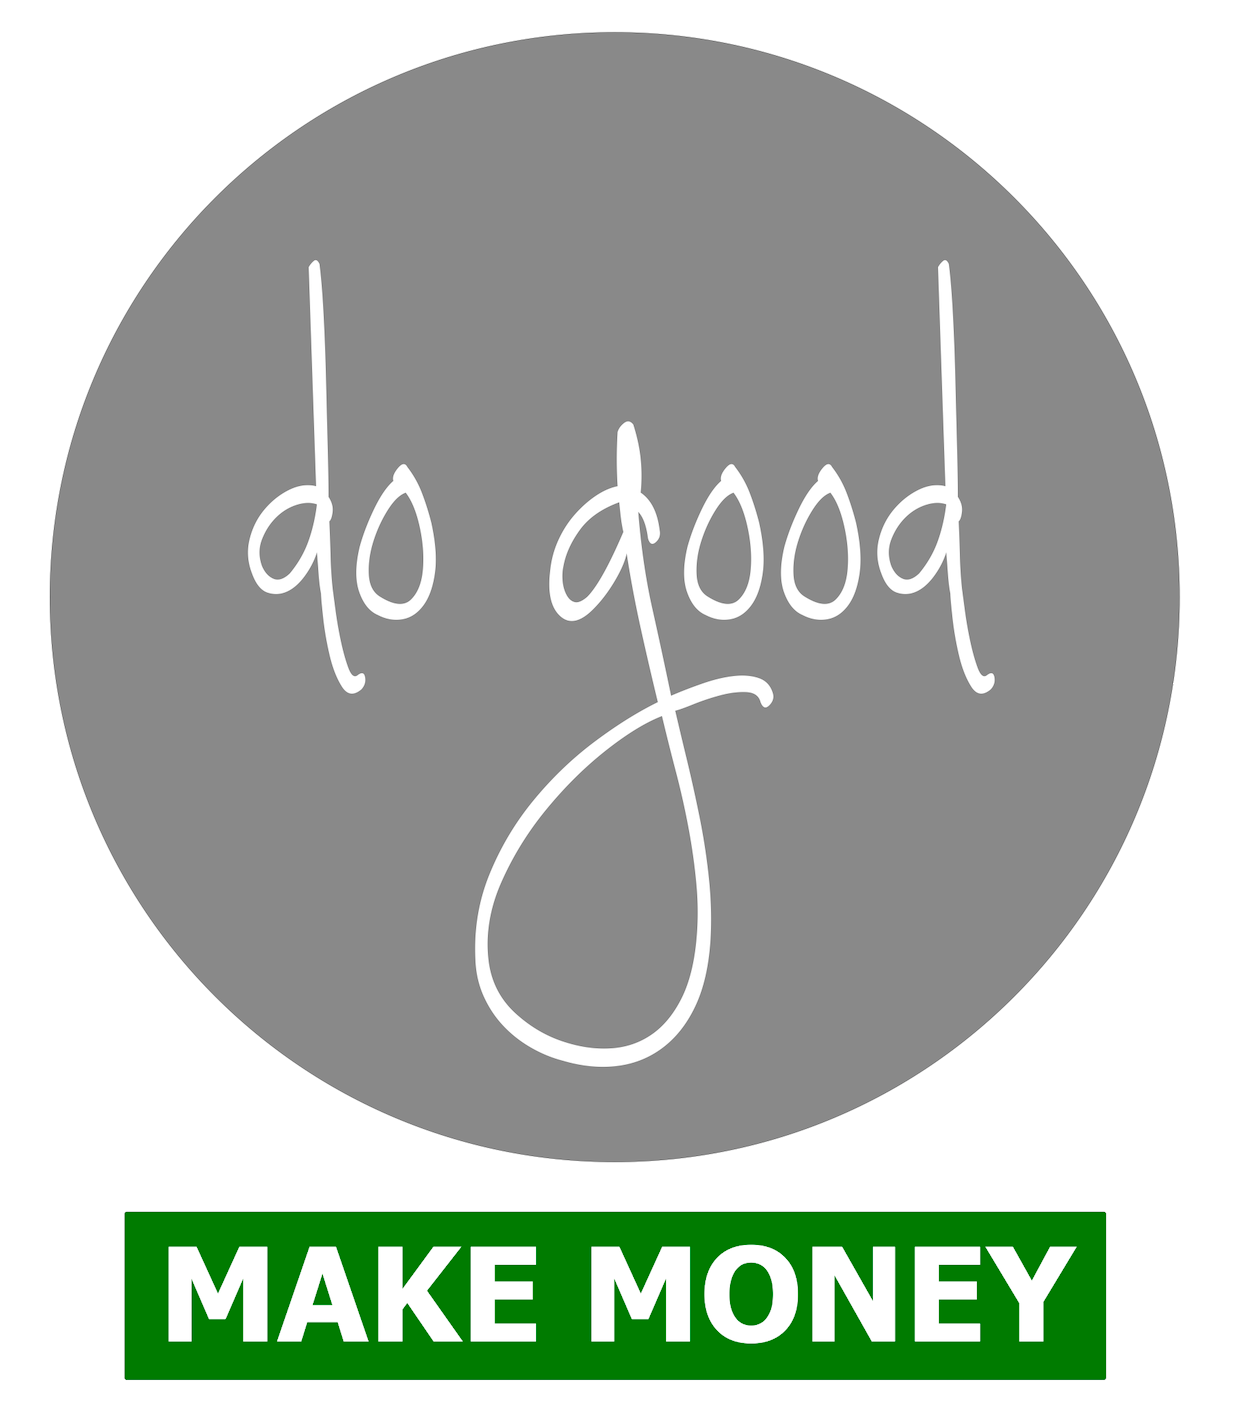 Do Good: Make Money